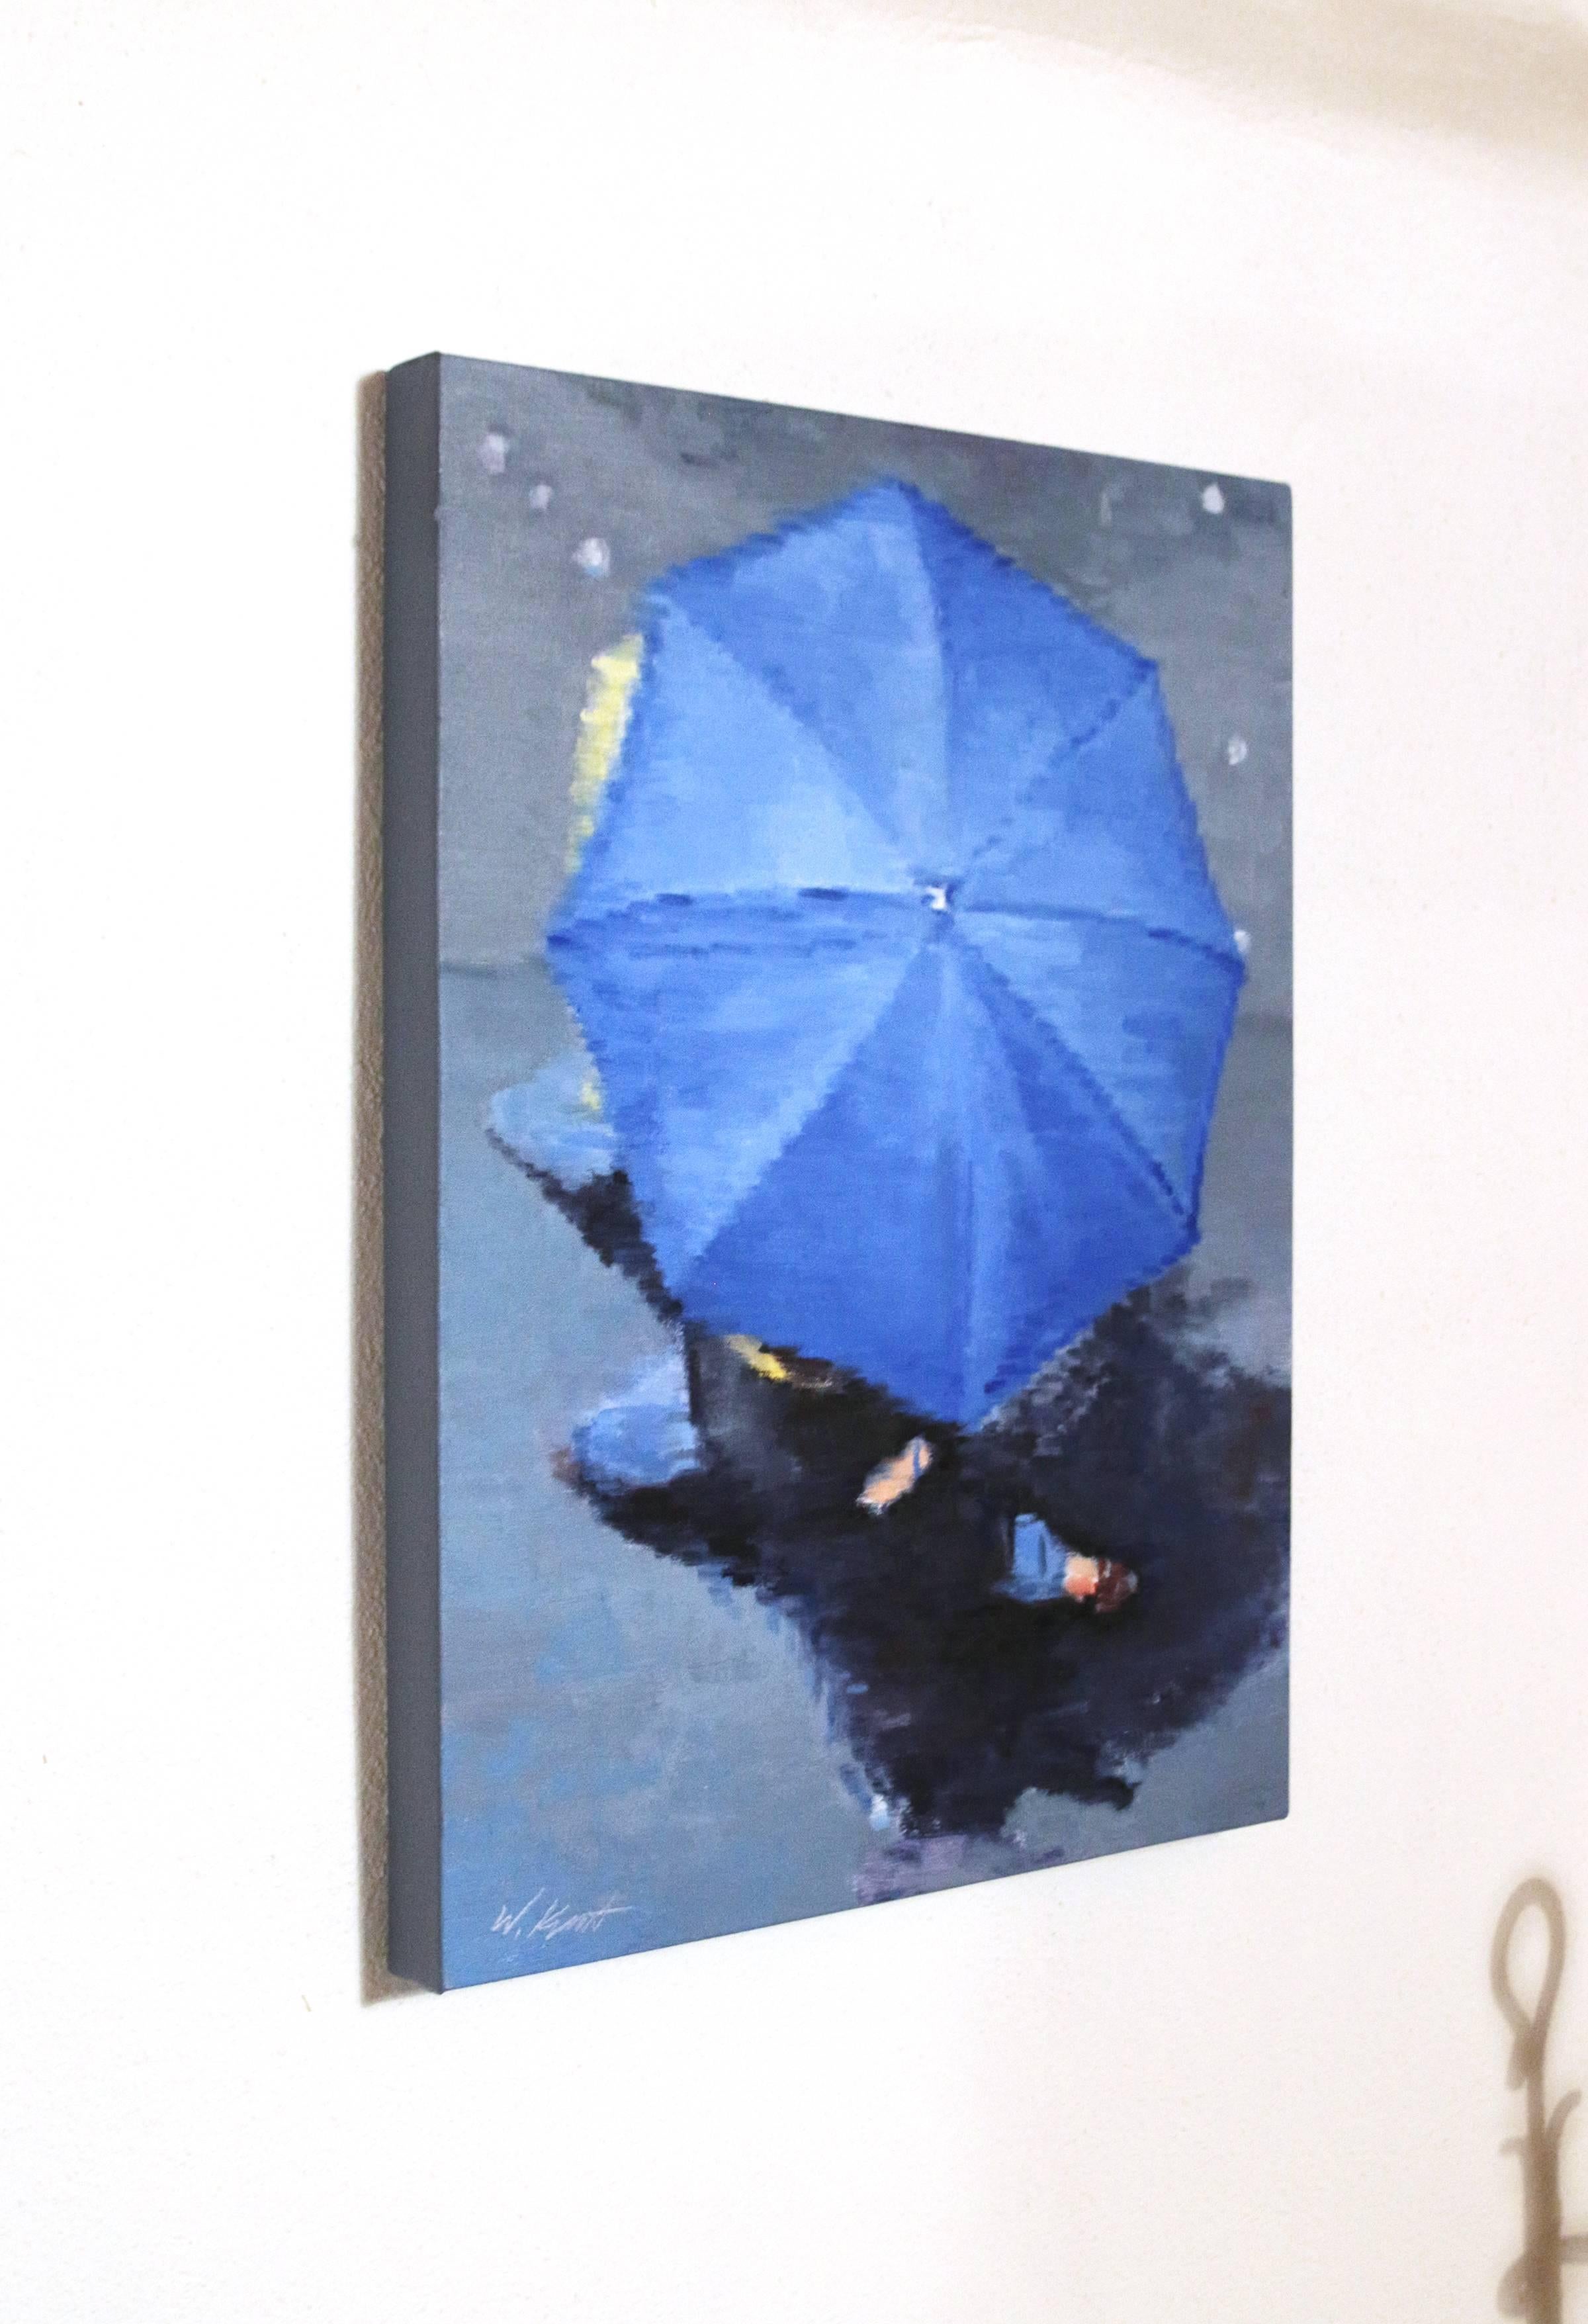 Parisian Couple under Blue Umbrella in Paris Rain - Painting by Warren Keating